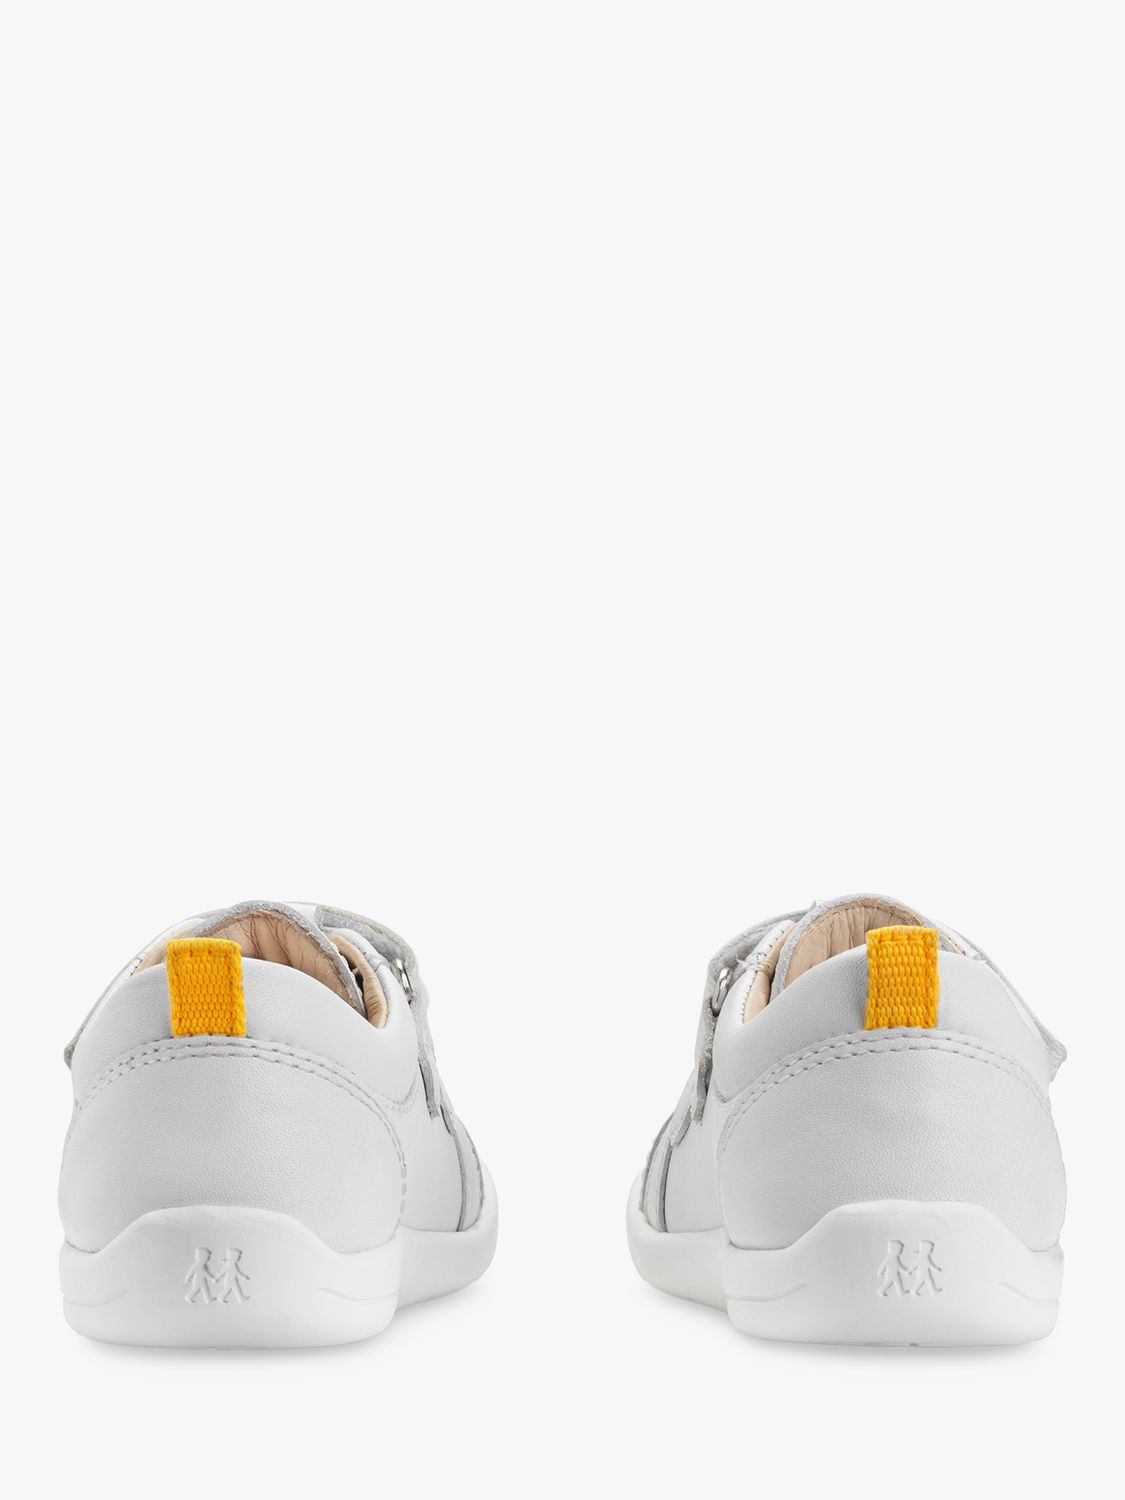 Start-Rite Baby Maze Leather Pre Walker Shoes, White, 5.5F Jnr